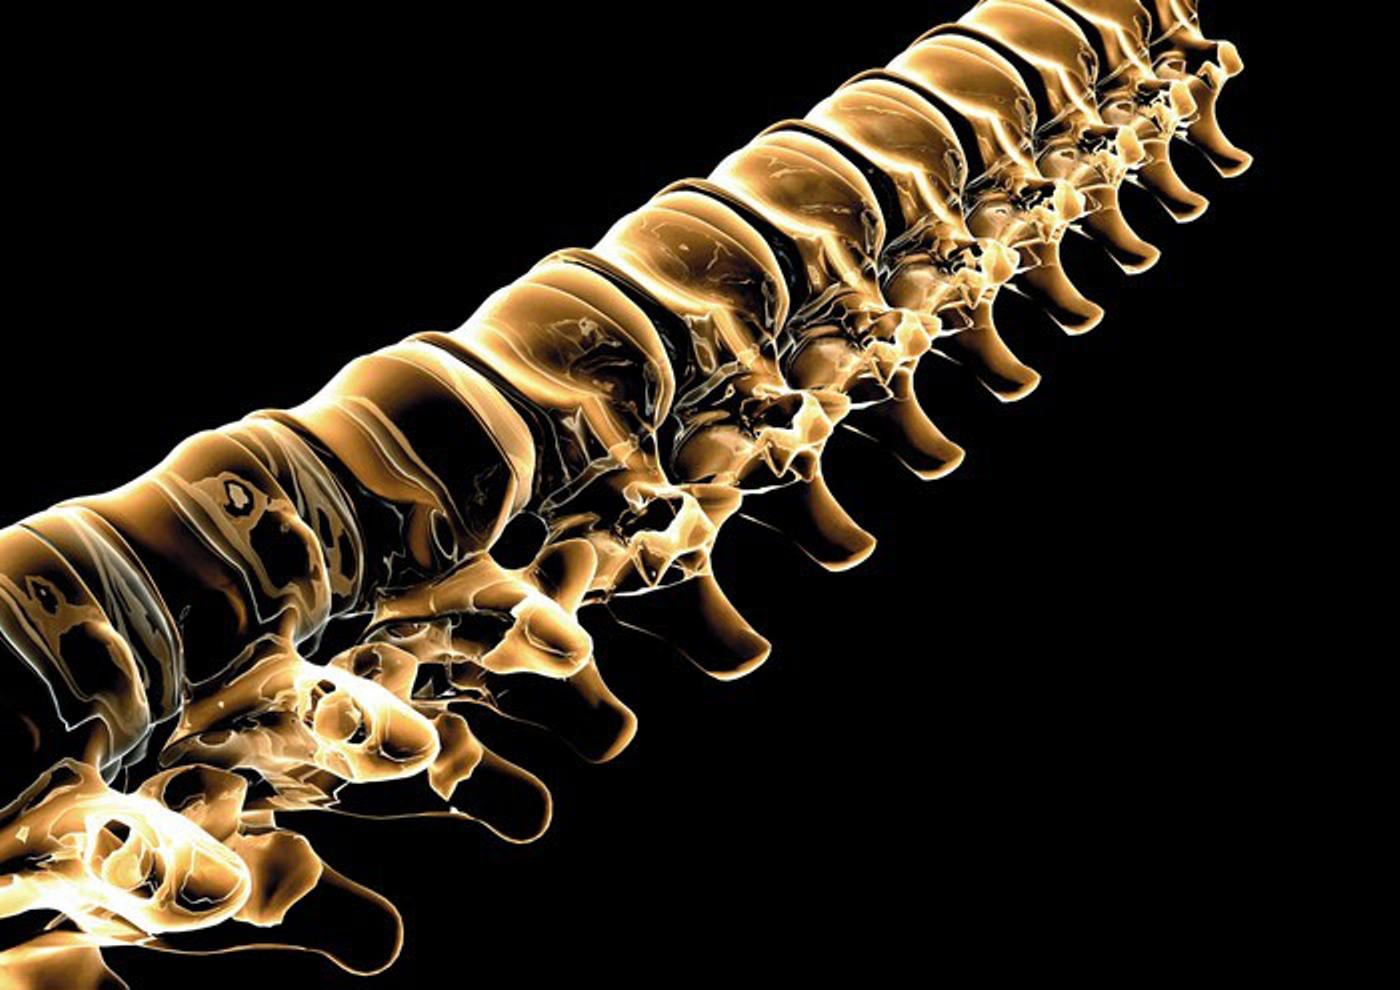 of X ray human bones spine free desktop background   free wallpaper